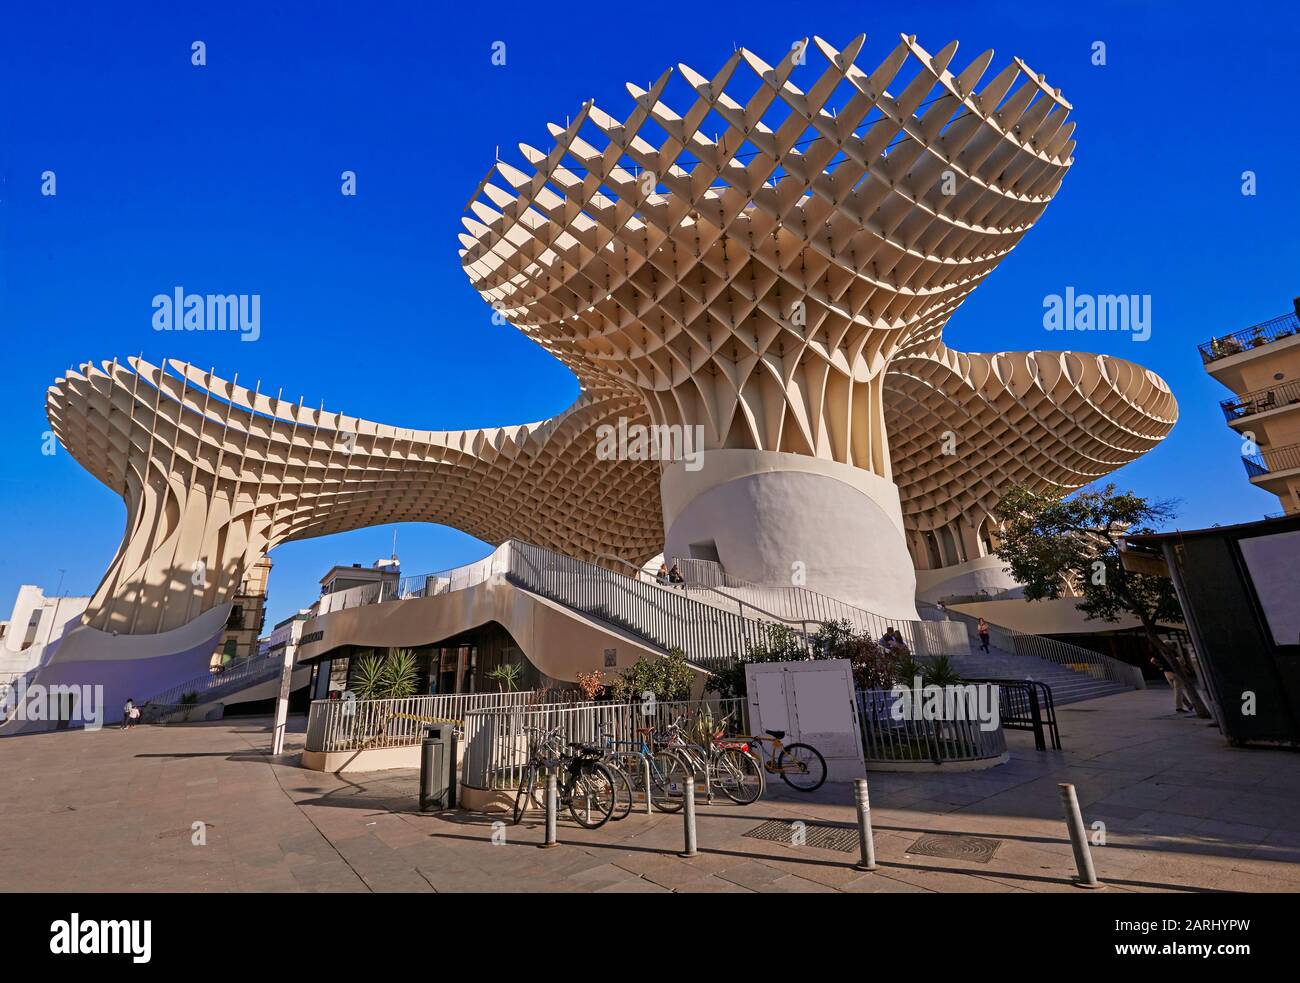 Low angle view of the Metropol Parasol at the 'Plaza de la Encarnacion' in Seville, Spain Stock Photo